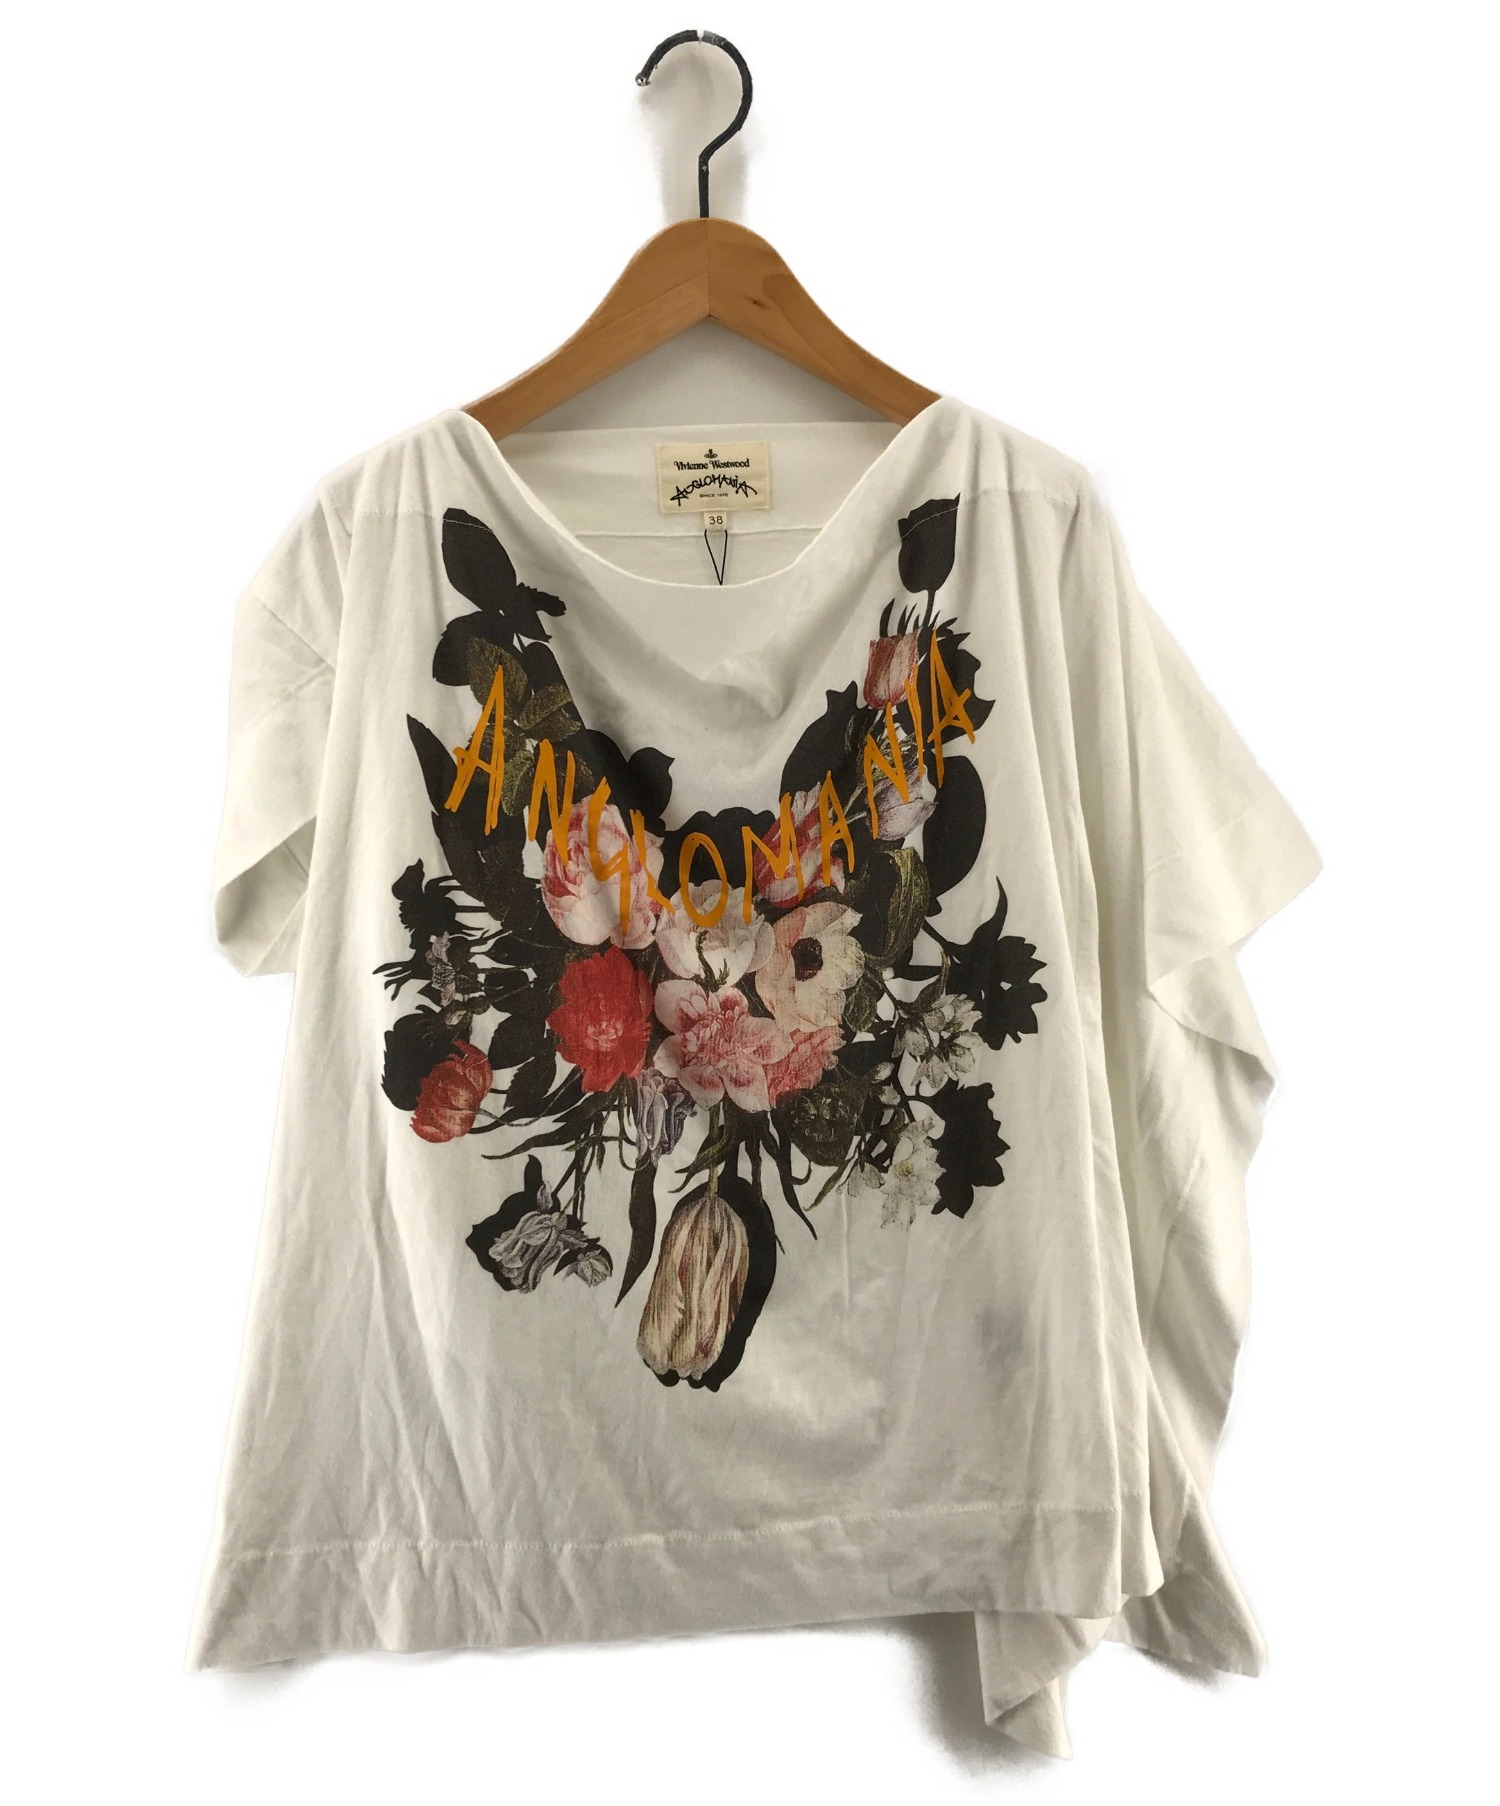 Vivienne Westwood ANGLOMANIA (ヴィヴィアンウエストウッド アングロマニア) プリントカットソー Tシャツ ホワイト  サイズ:38